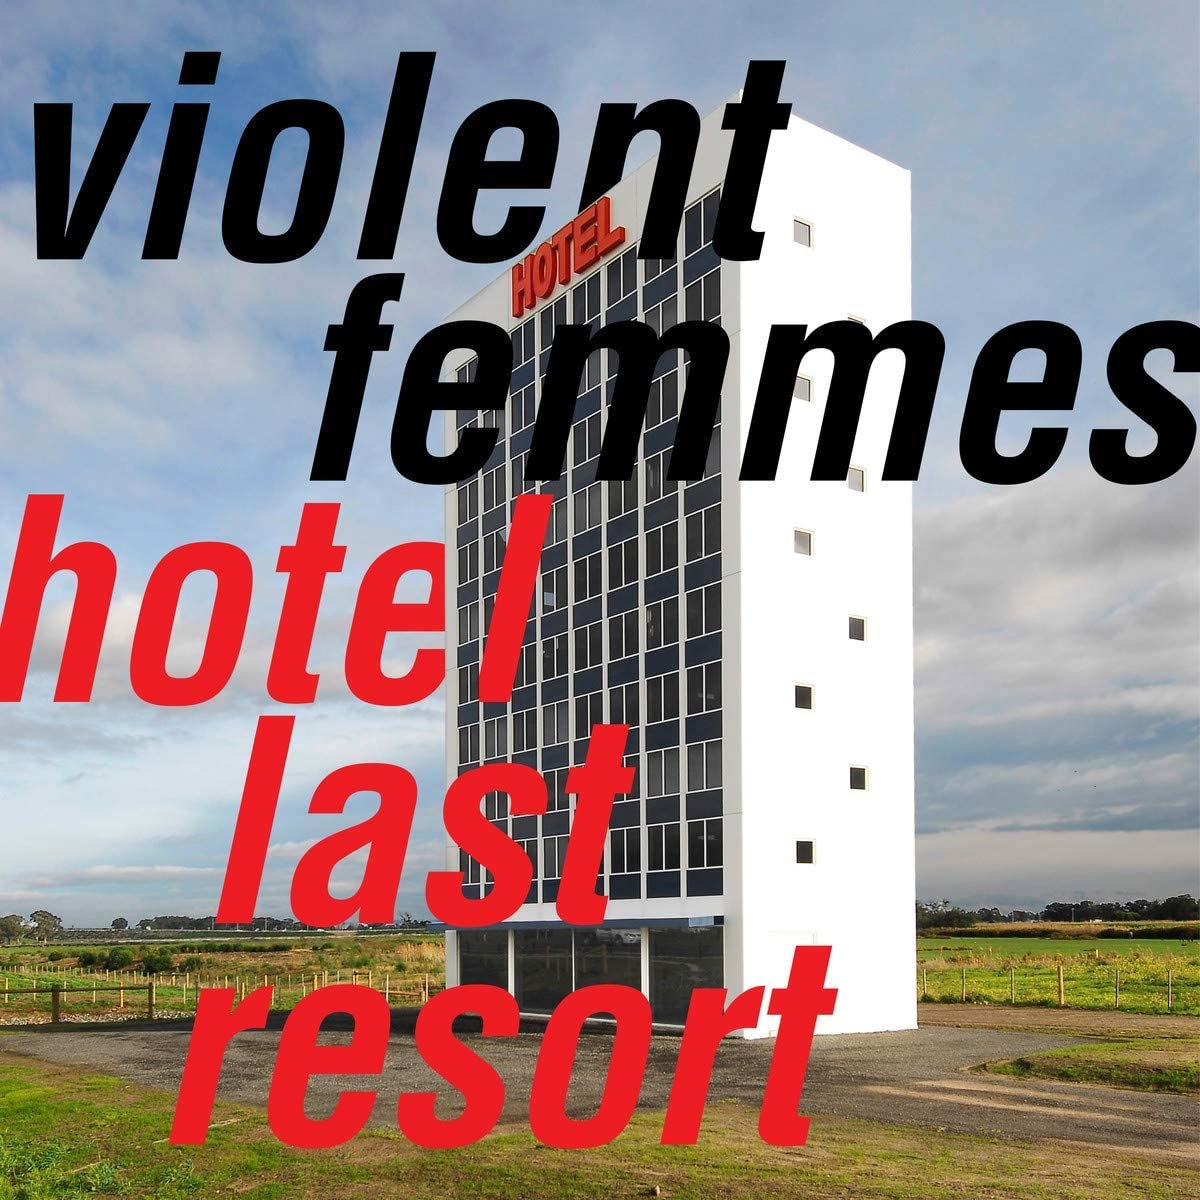 Hotel Last Resort | Violent Femmes